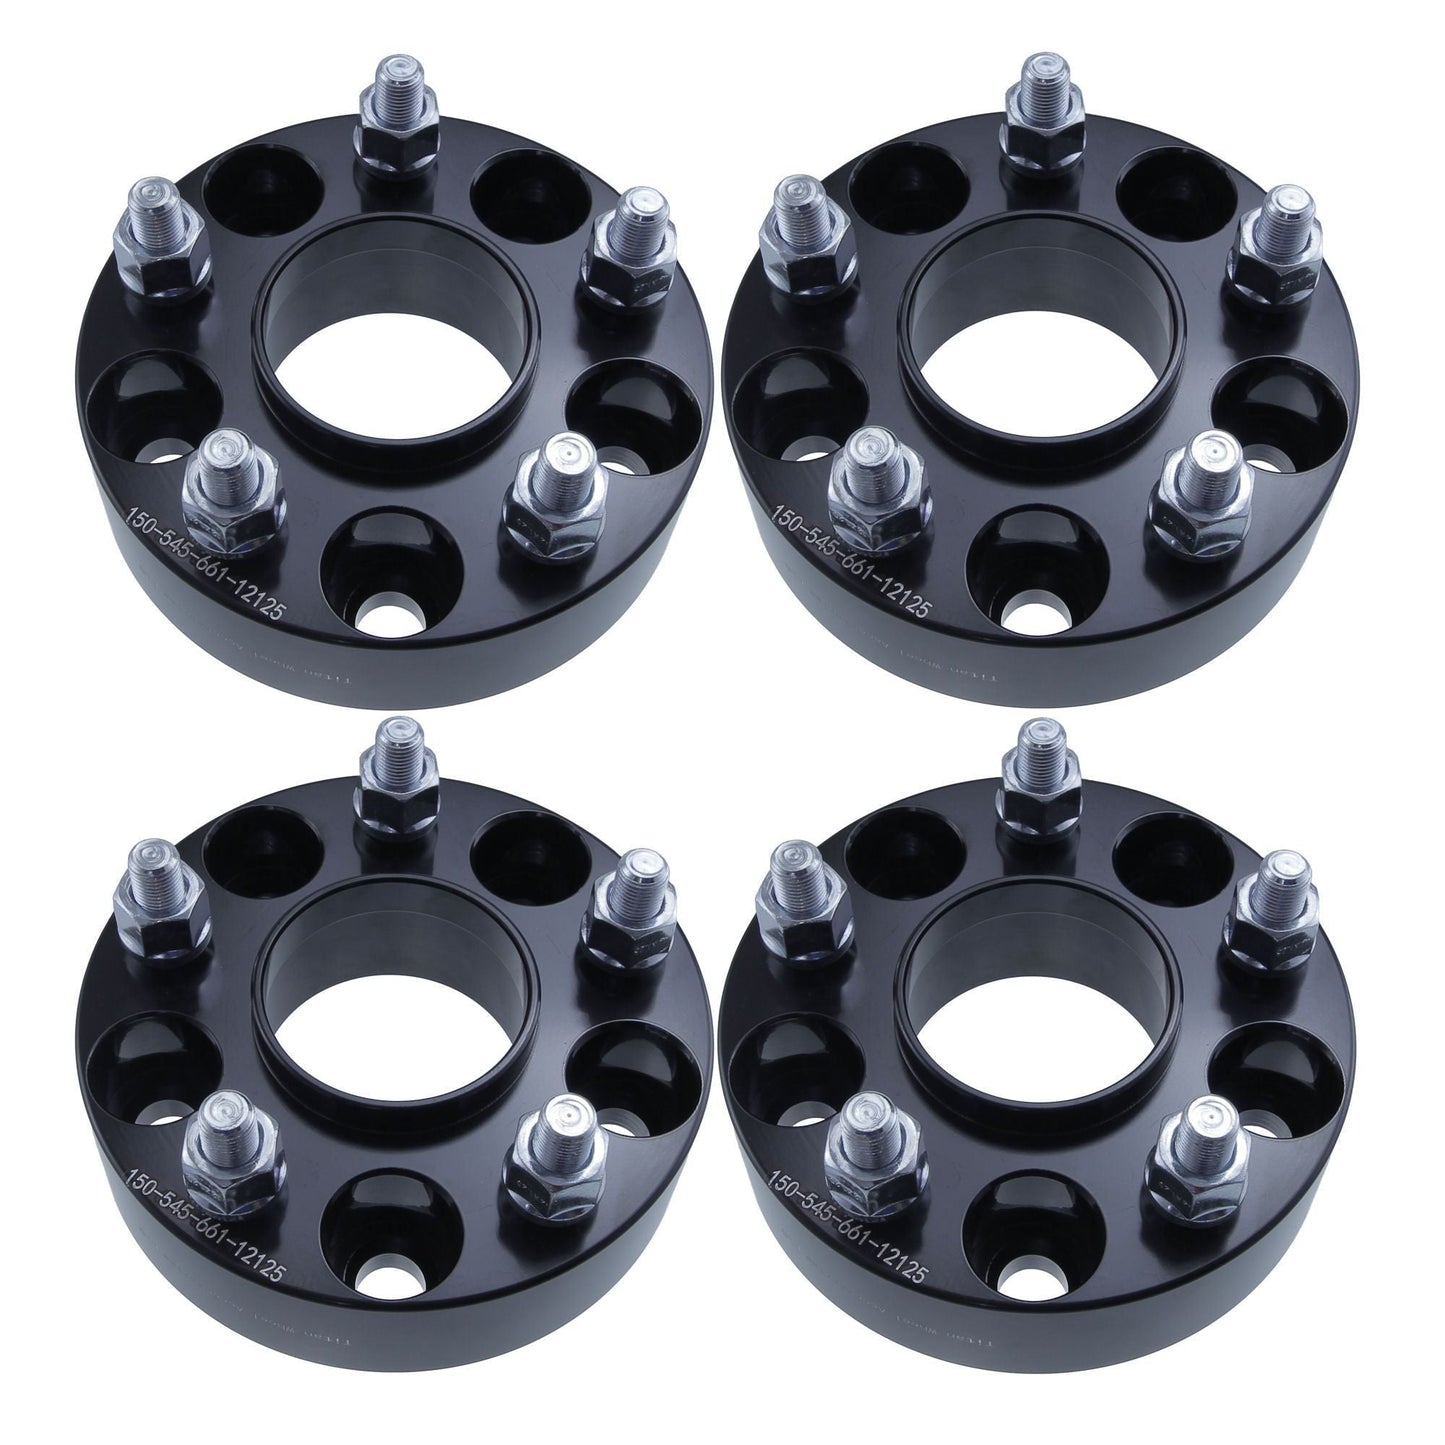 38mm (1.5") Titan Wheel Spacers for Nissan Altima Maxima 350z 370z Infiniti G35 G37 Q50 | 5x114.3 (5x4.5) | 66.1 Hubcentric |12x1.25 Studs | Set of 4 | Titan Wheel Accessories